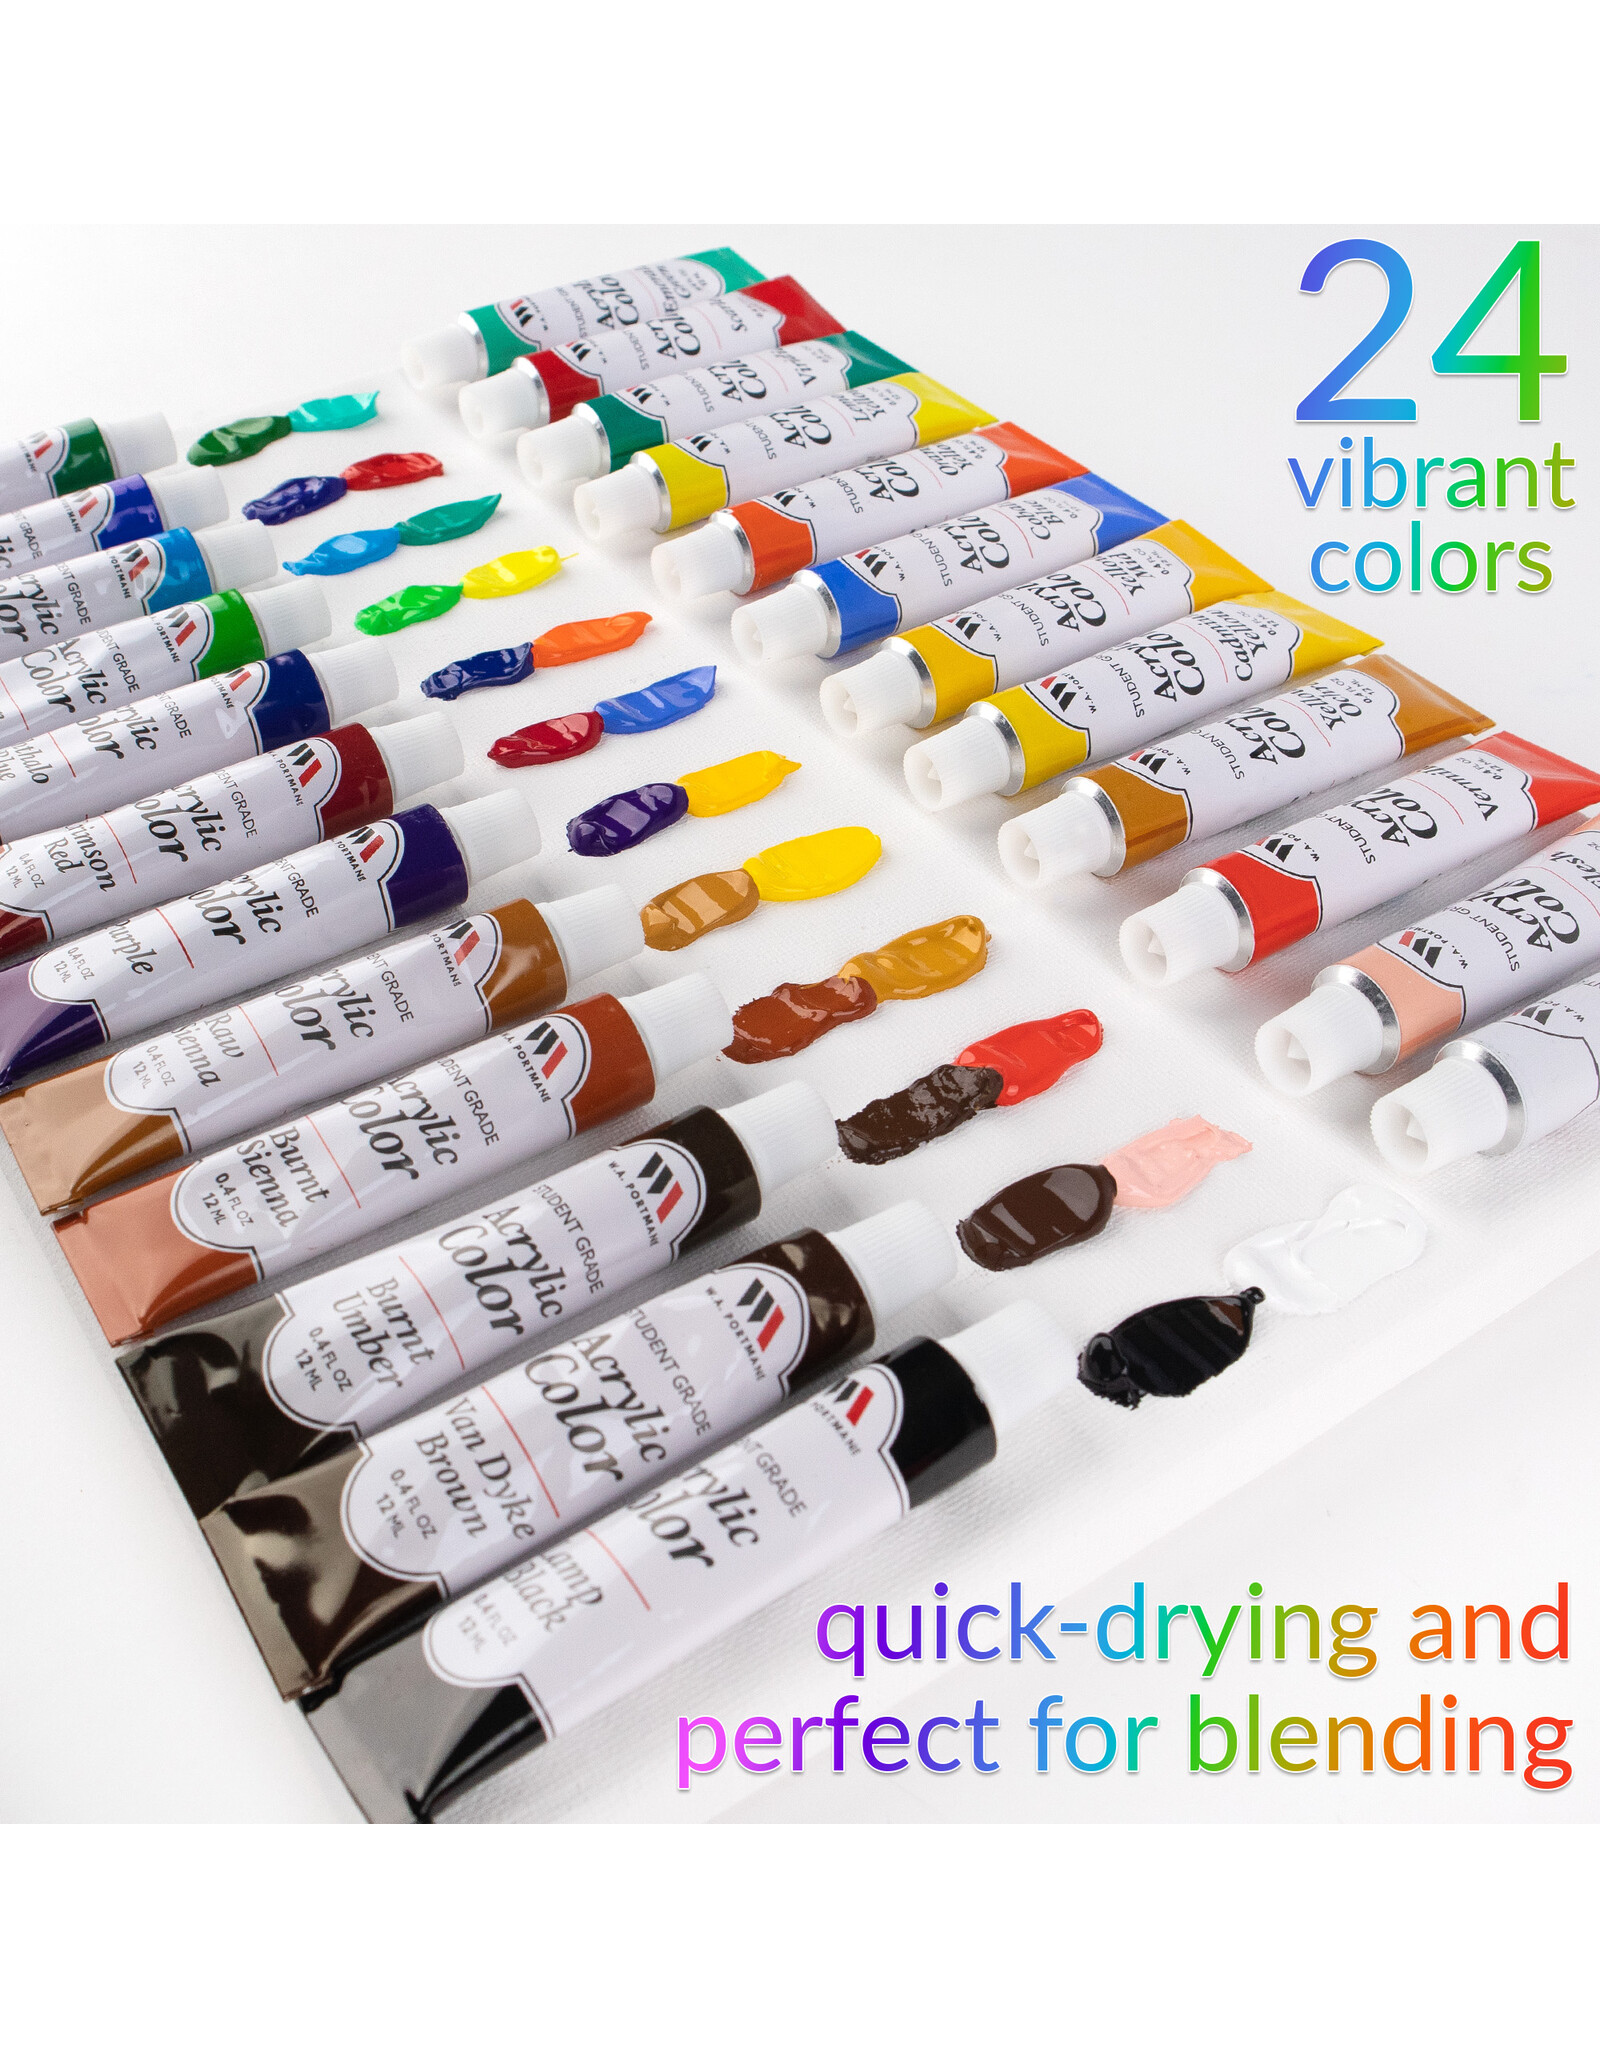 WA Portman 29pc Complete Watercolor Kit - The Art Store/Commercial